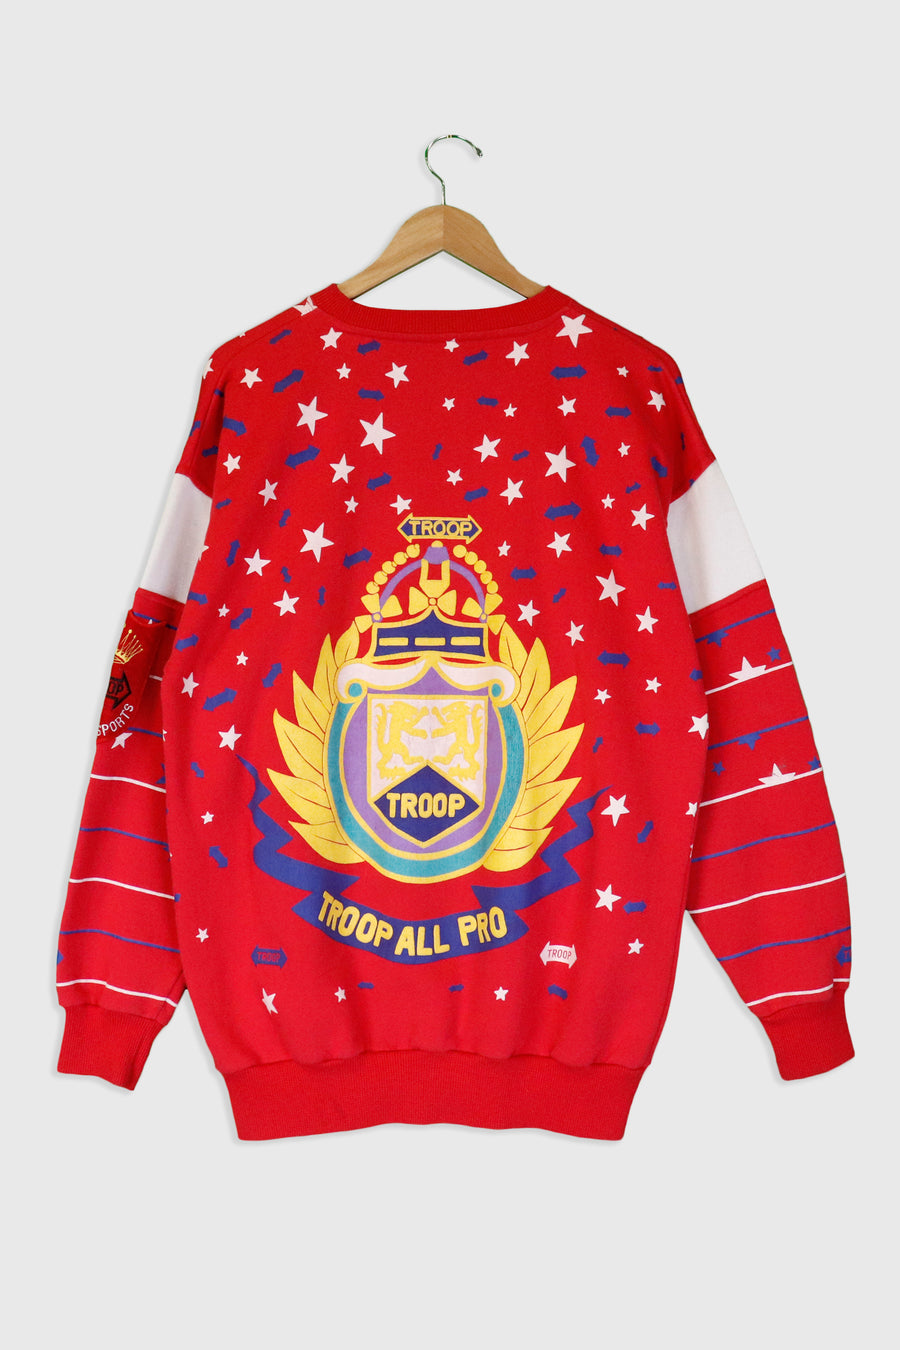 Vintage Troop All Pro Sweatshirt Sz L